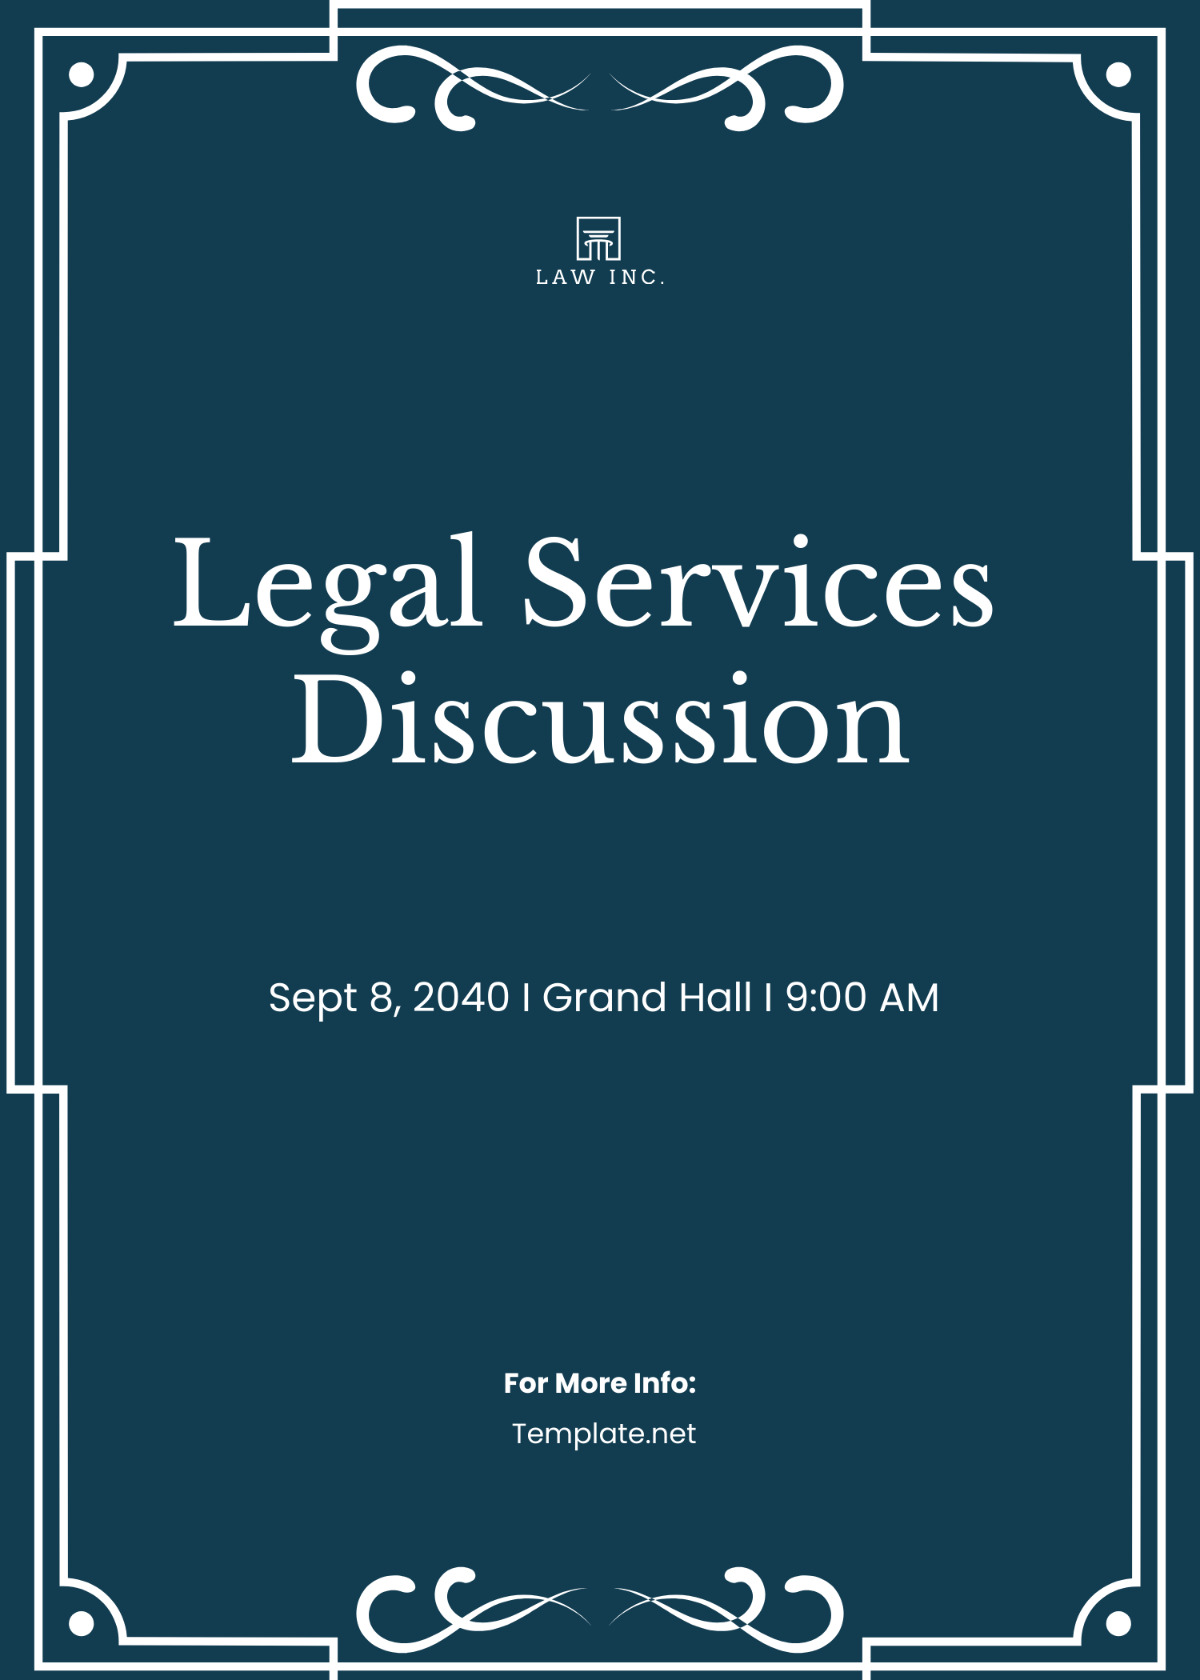 Law Firm Service Invitation